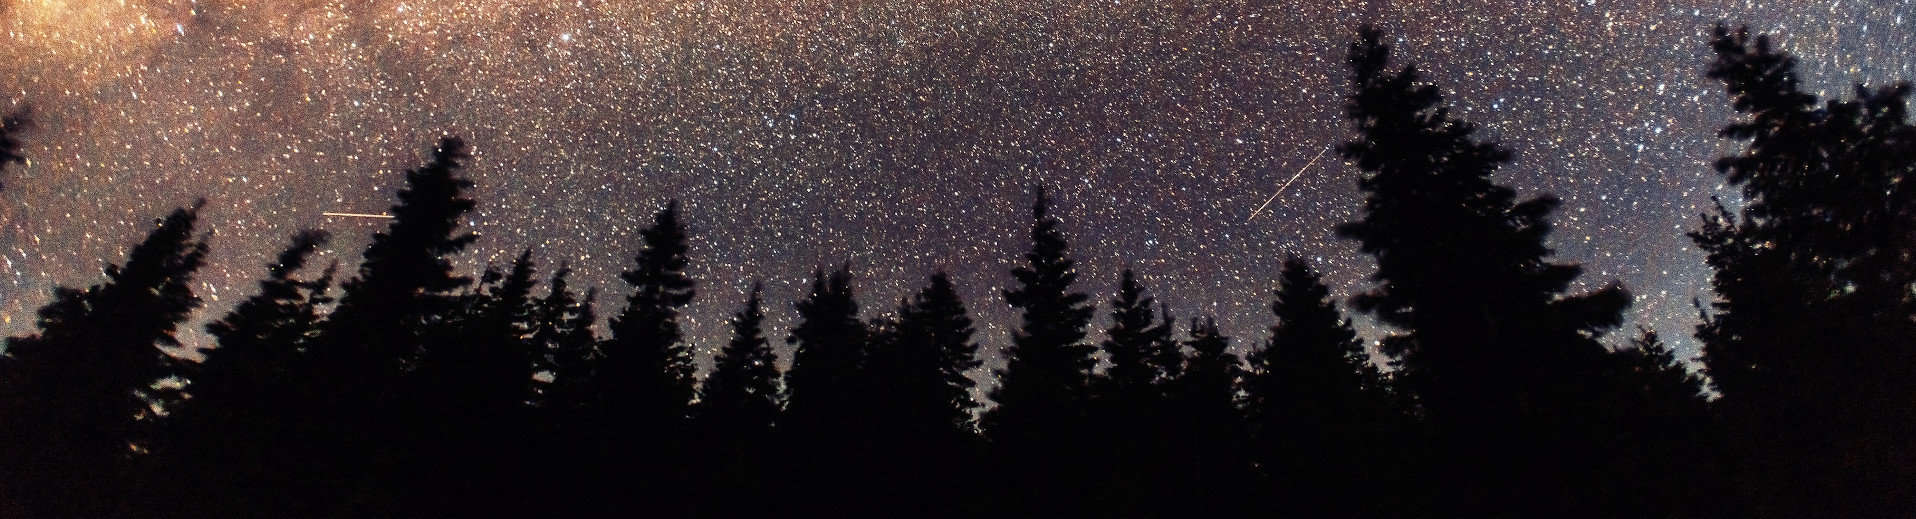 night sky and trees.